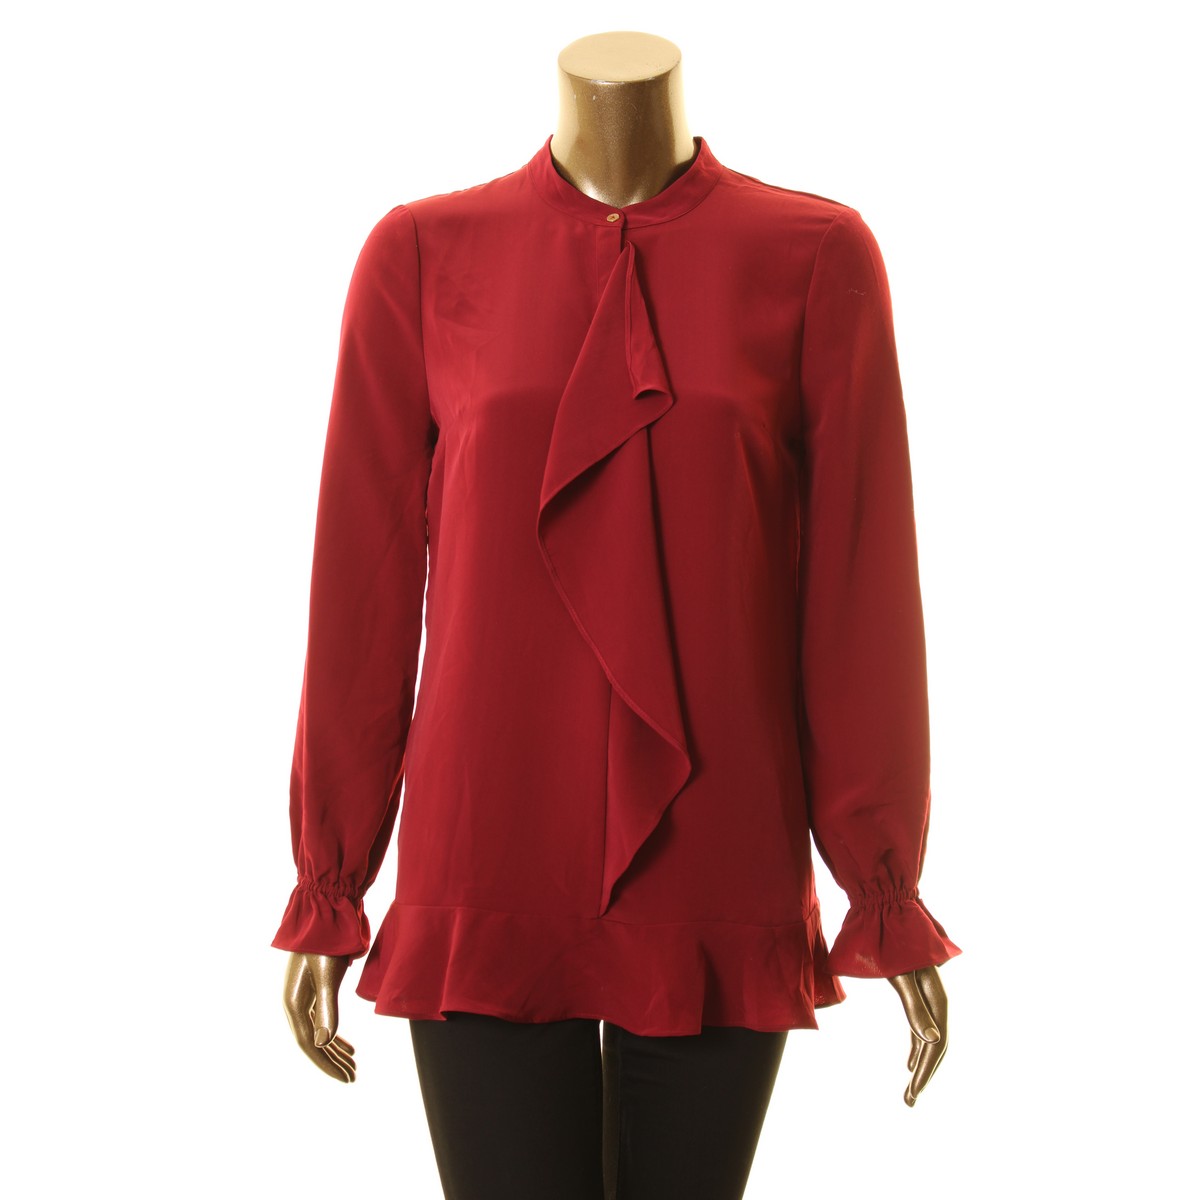 ZOE BY RACHEL ZOE NEW Women's Sangria Ruffled Peplum Blouse Shirt Top ...